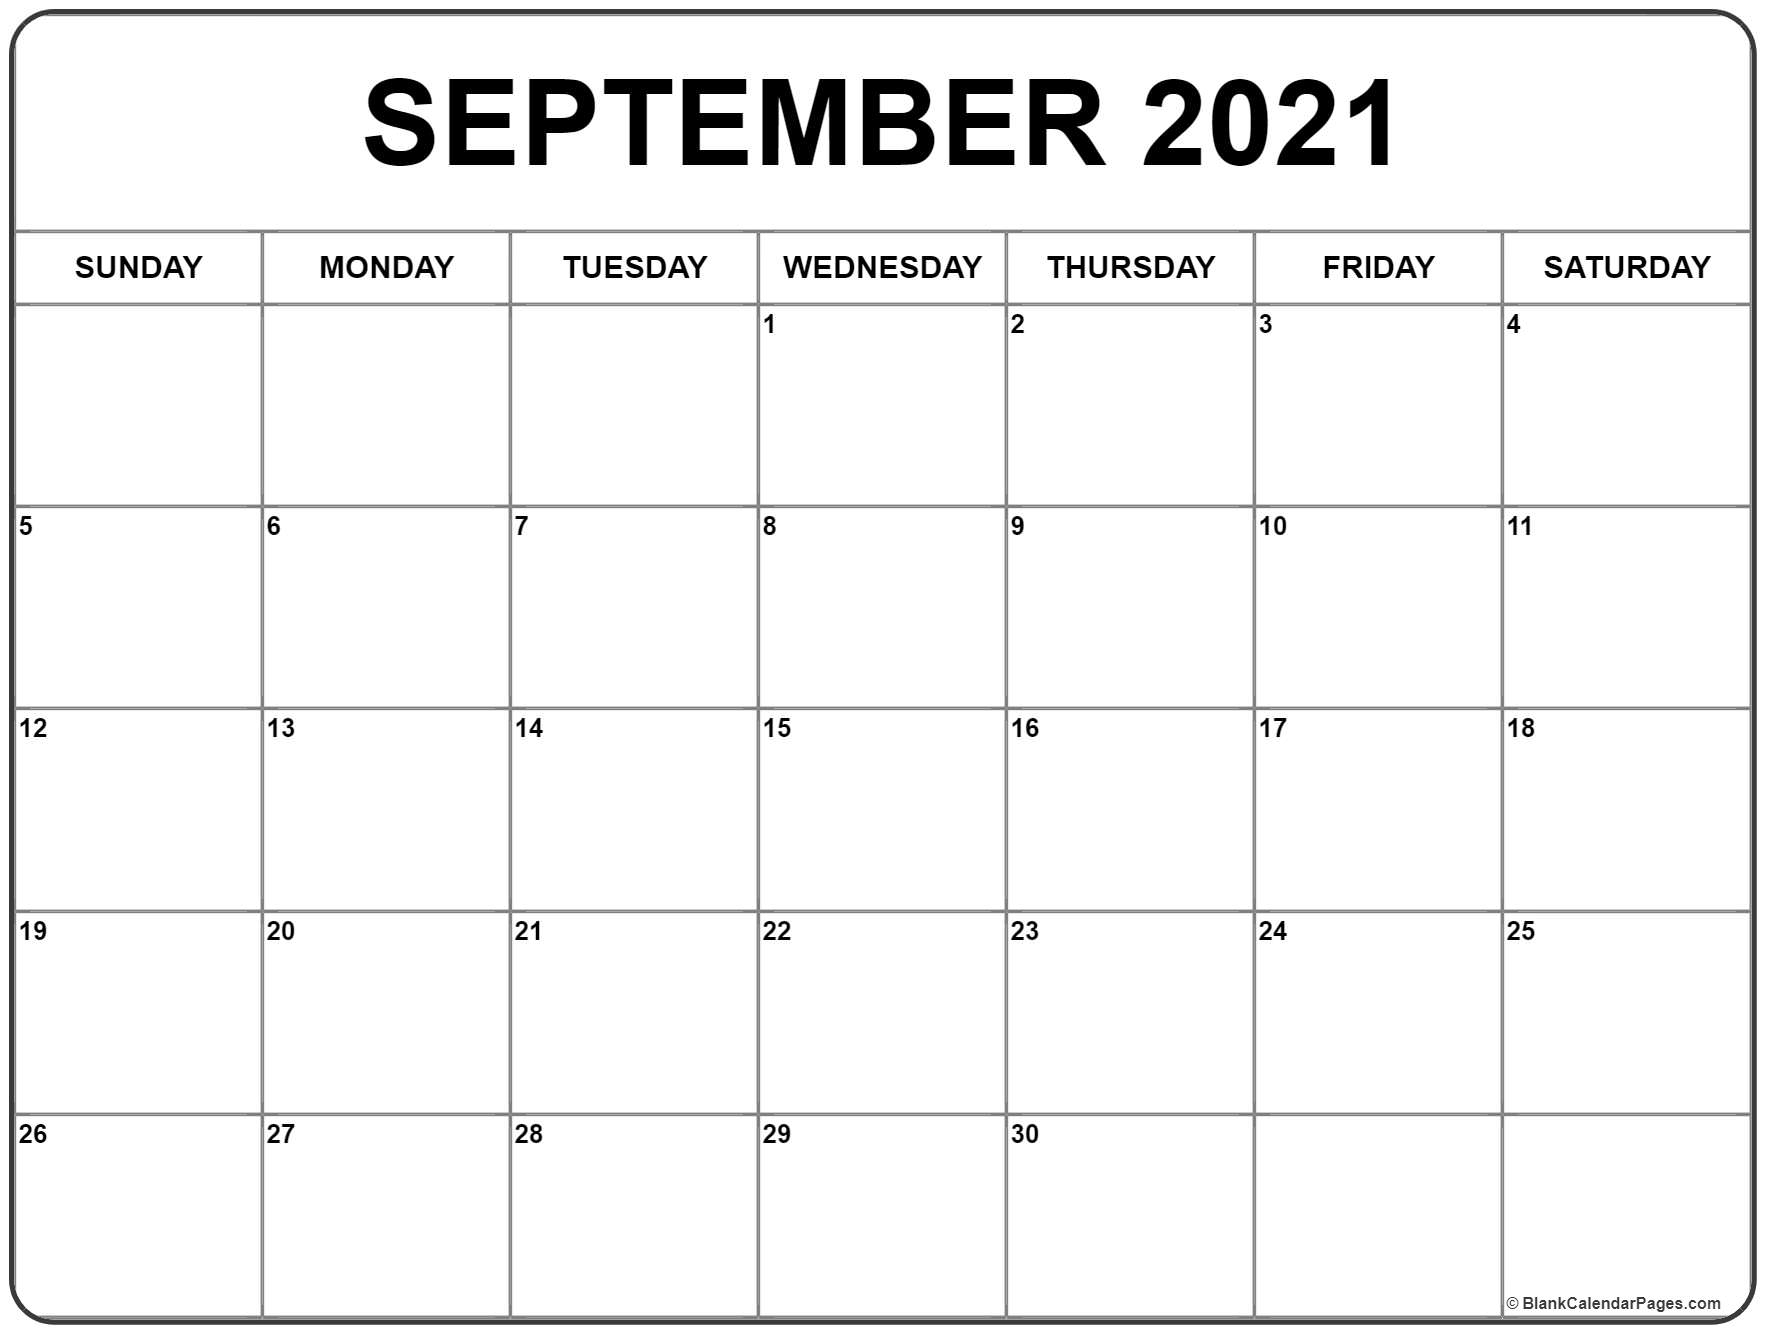 Get Aug And Sep 2021 Editable Calendars